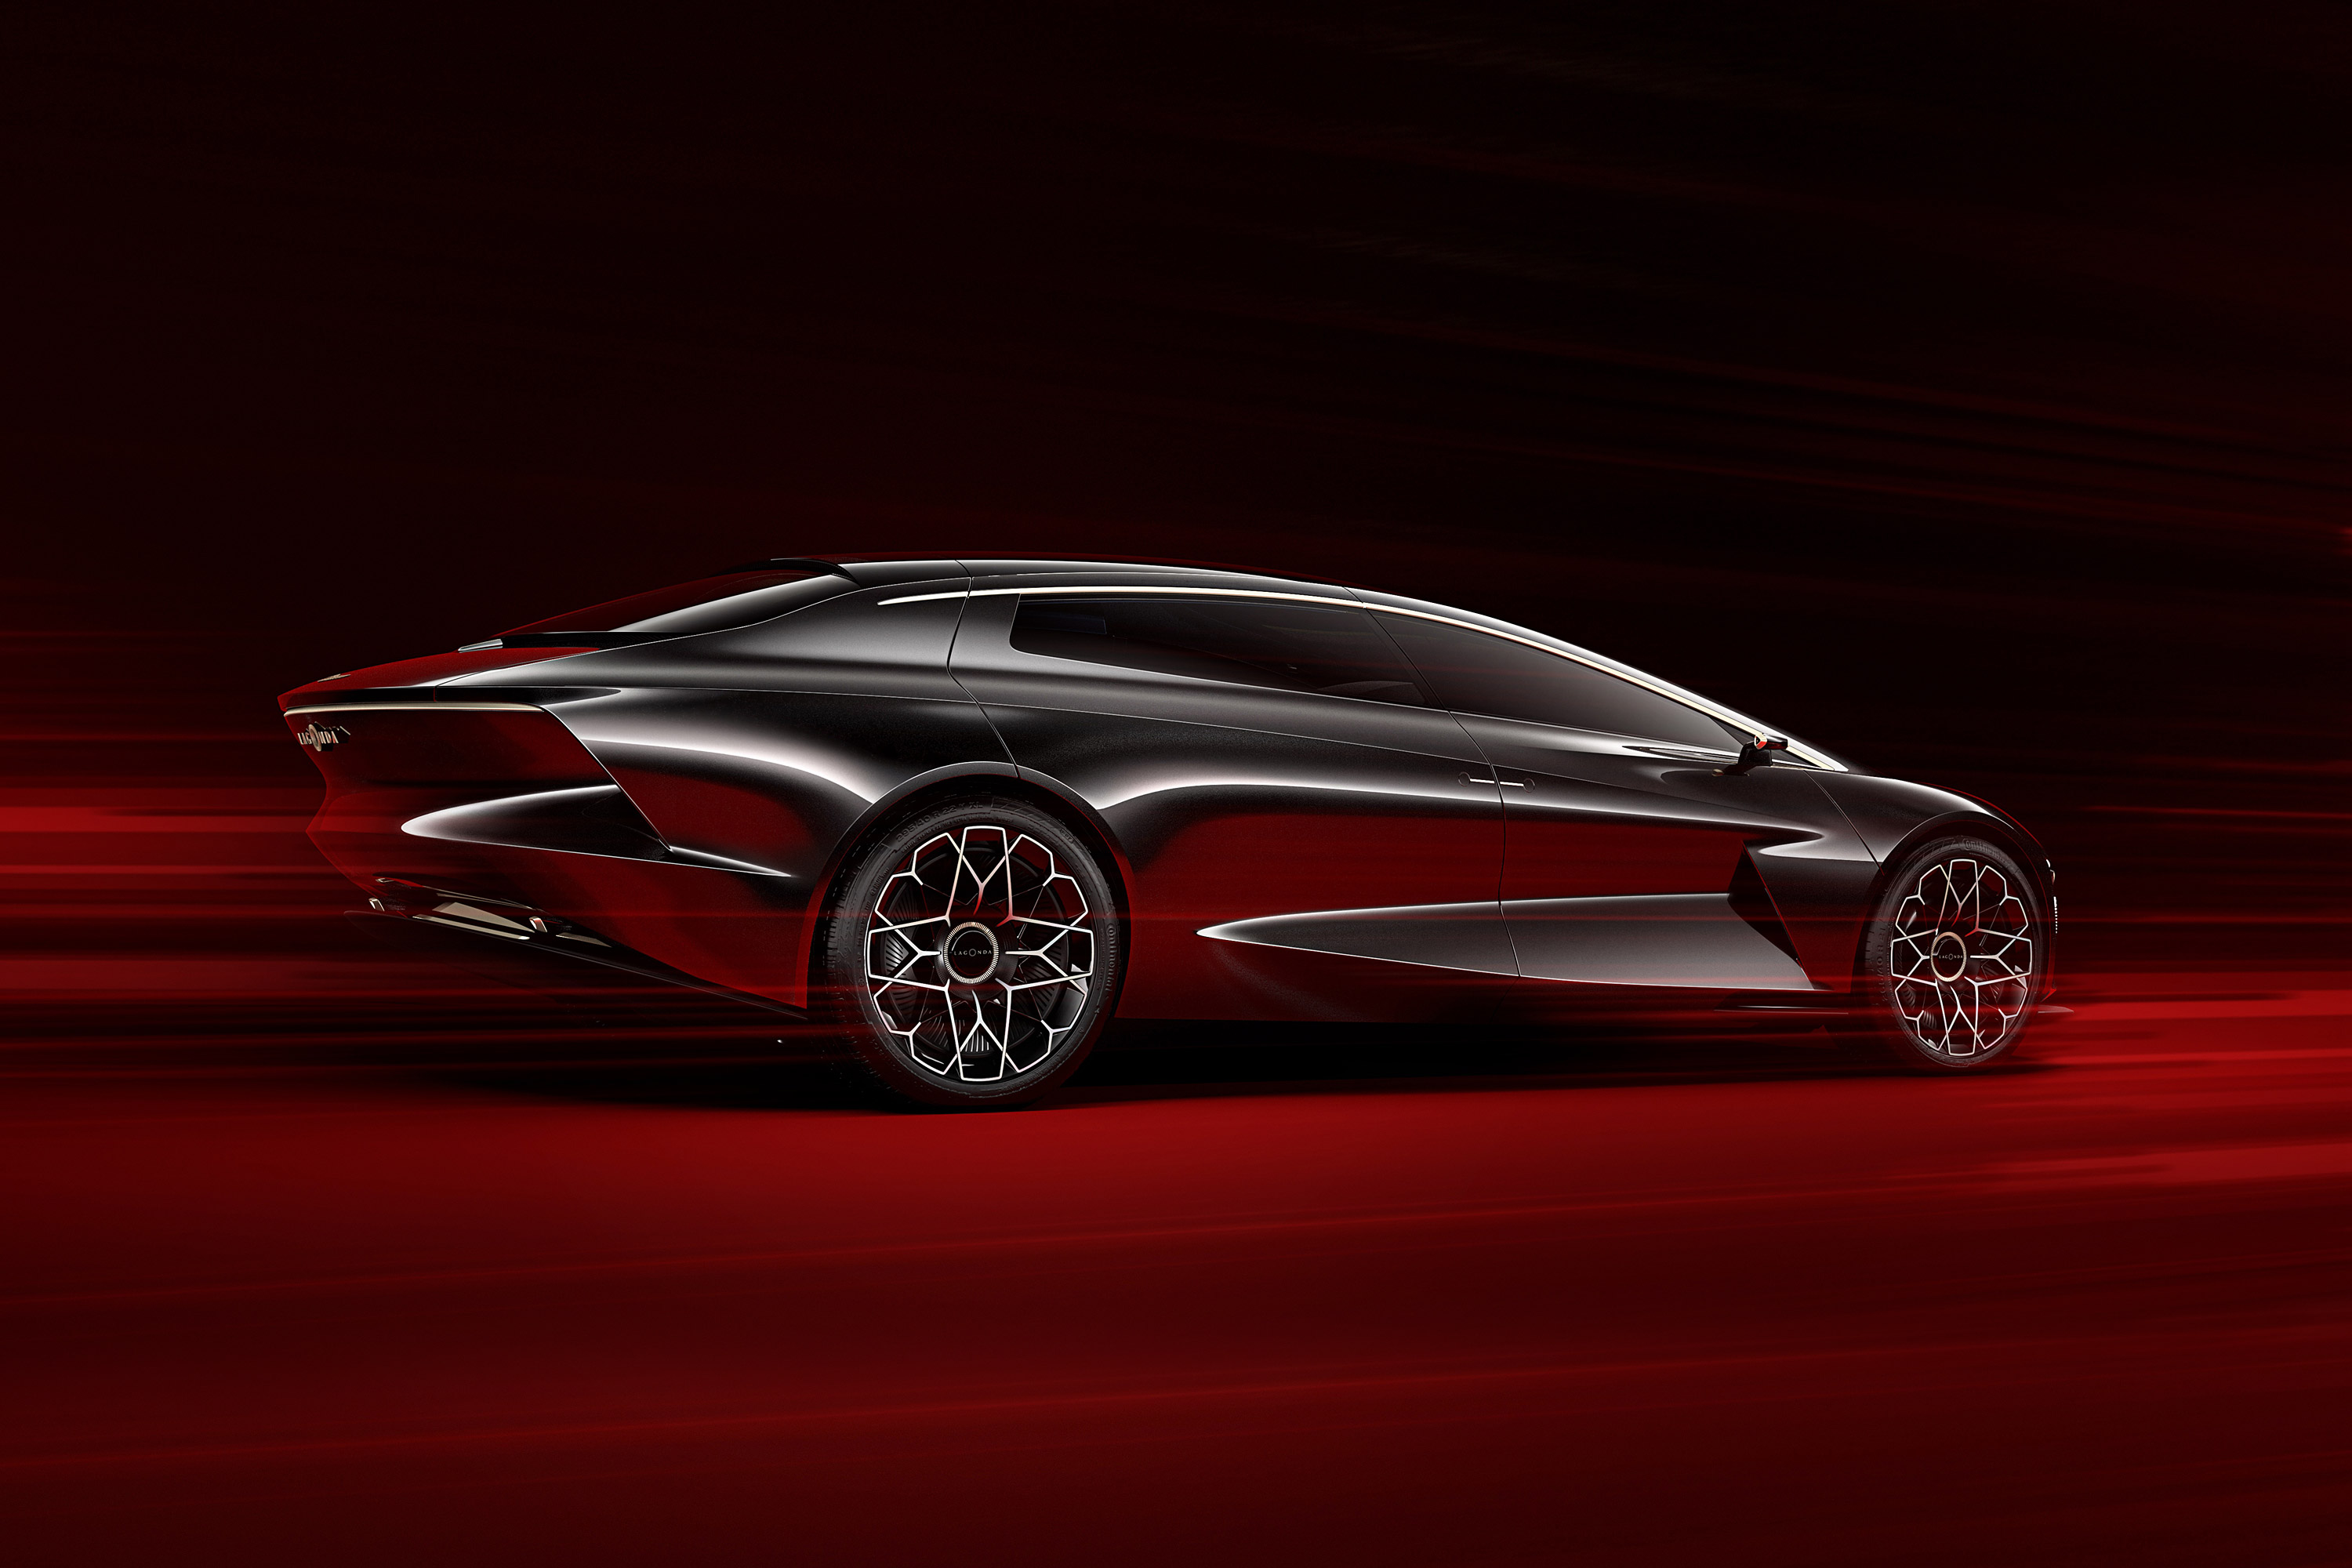  2018 Aston Martin Lagonda Vision Concept= Wallpaper.